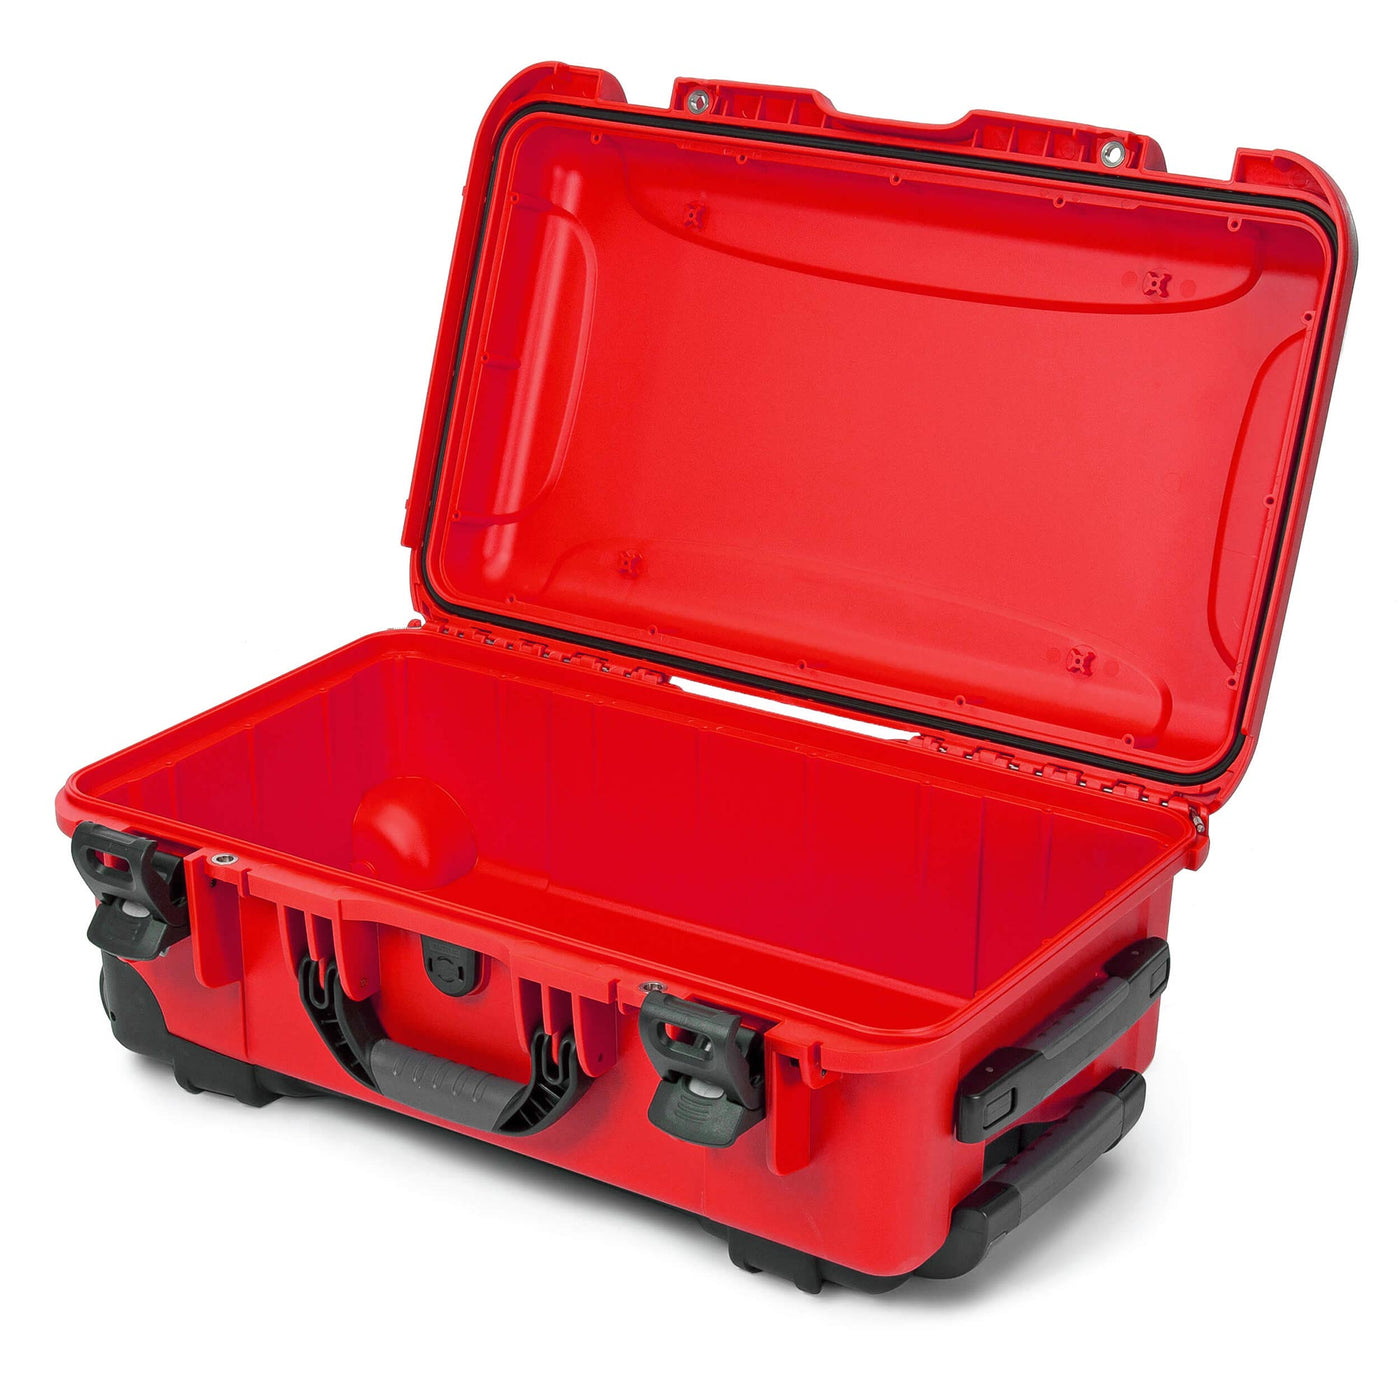 NANUK 935 First Aid case-Outdoor Case-Red-NANUK